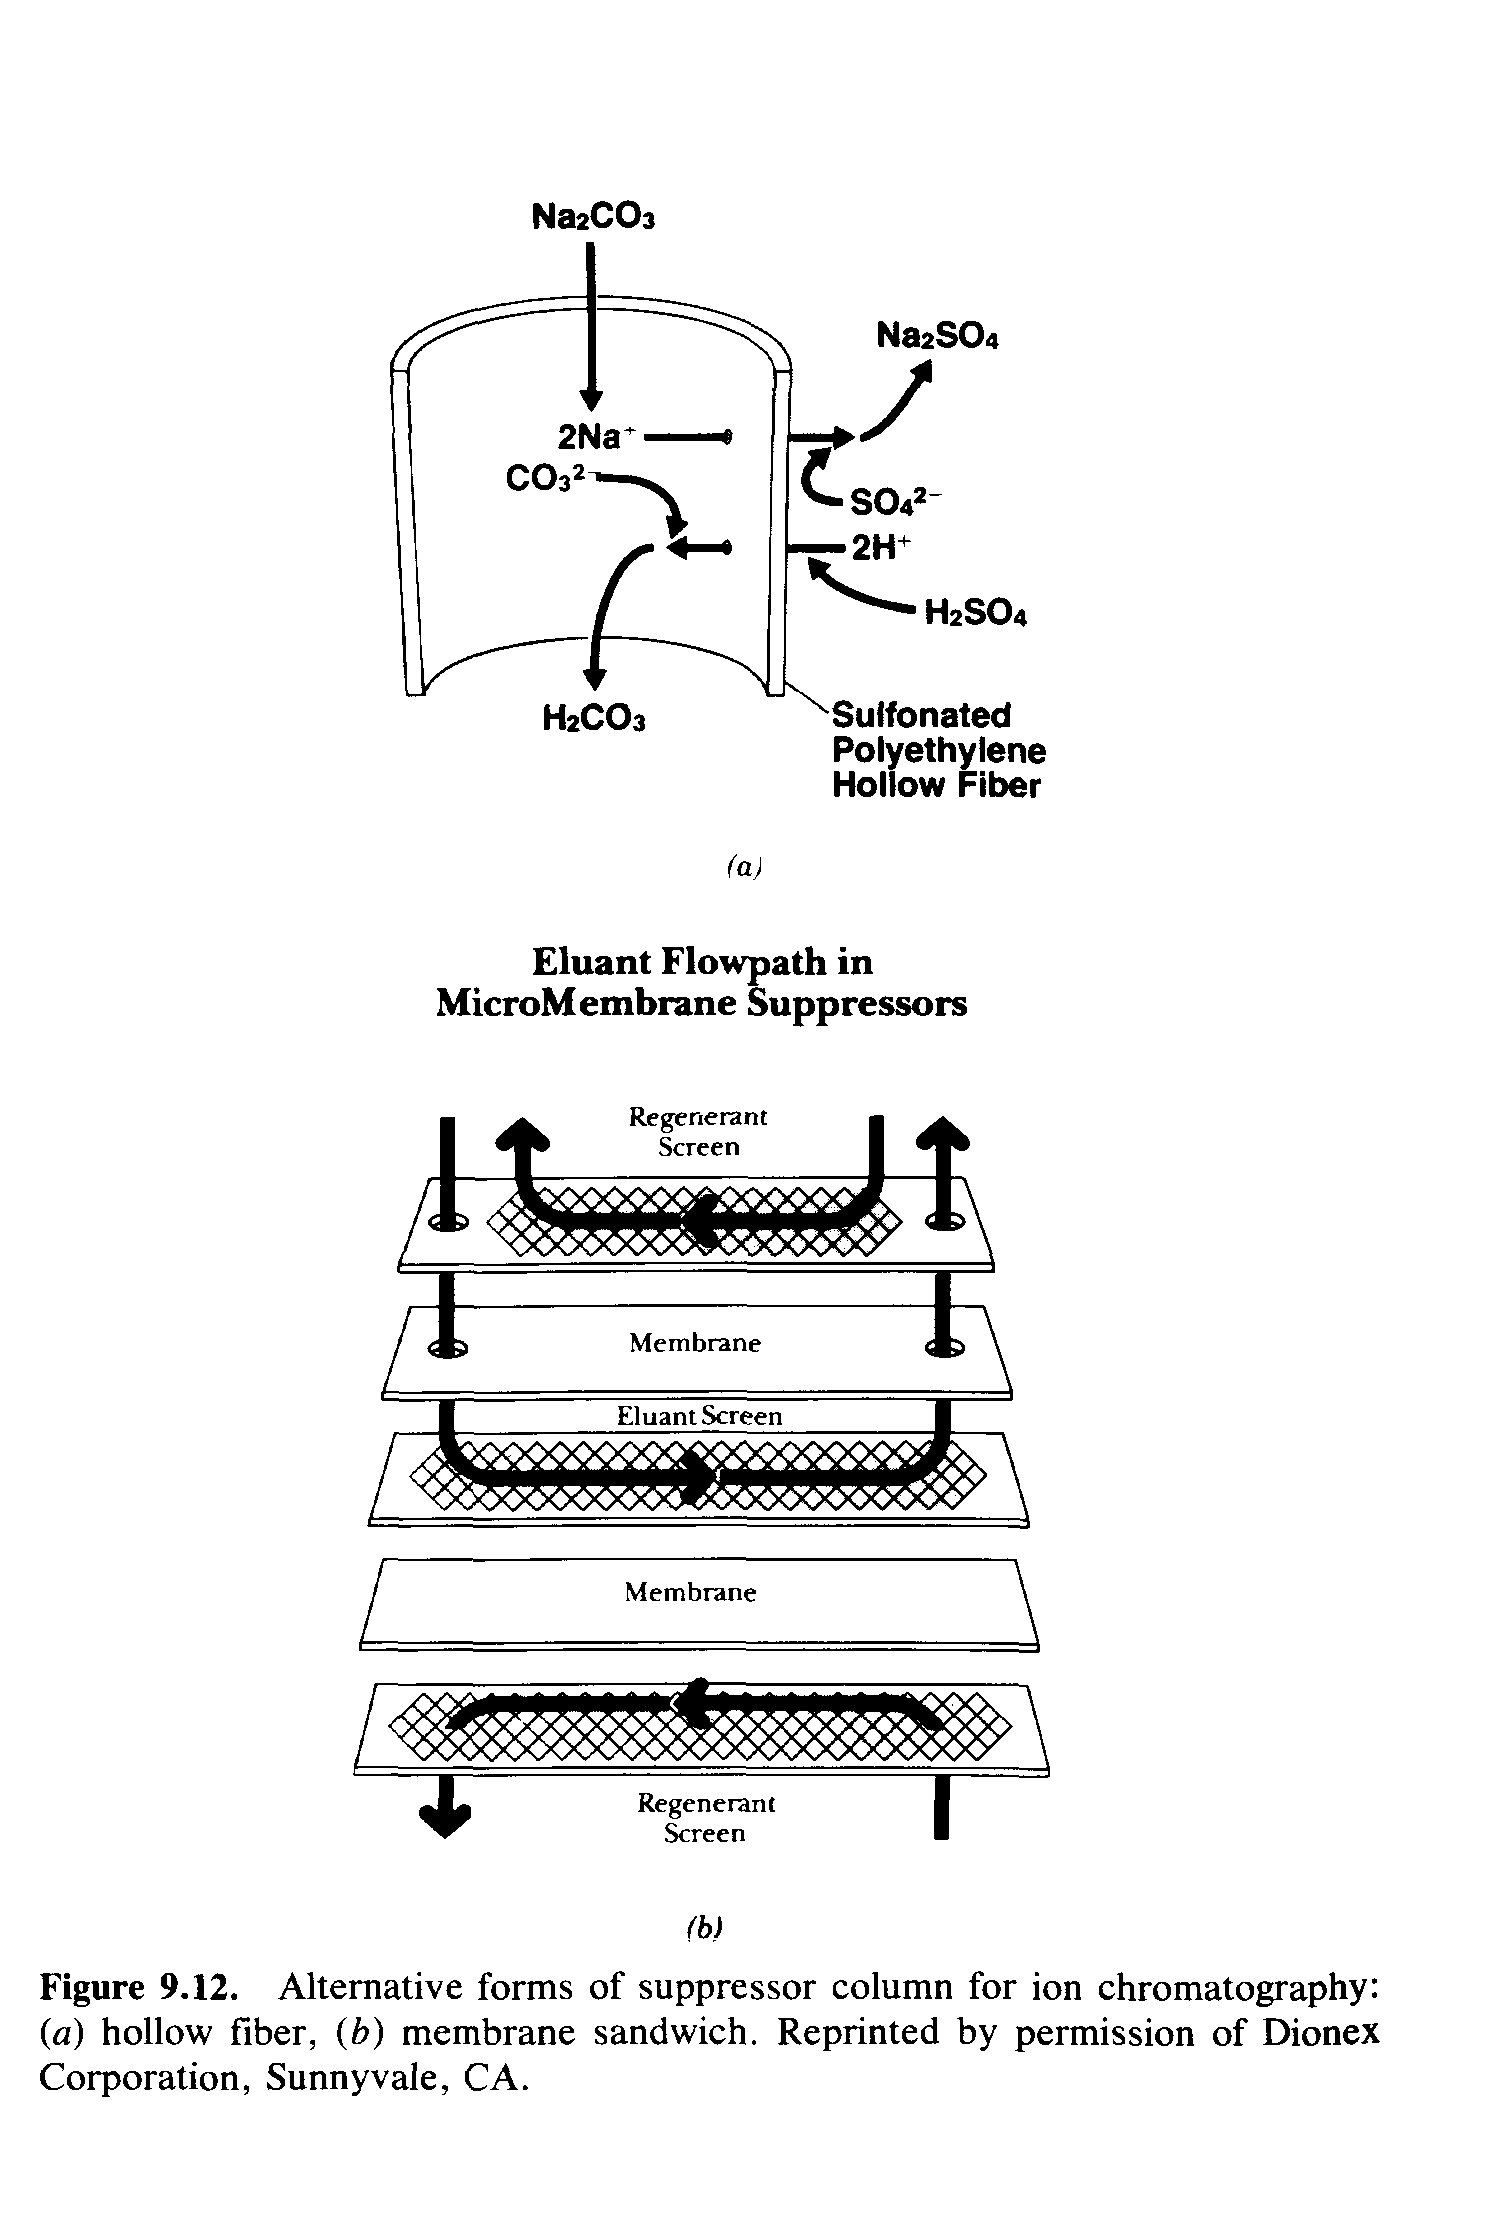 Figure 9.12. Alternative forms of suppressor column for ion chromatography (a) hollow fiber, (b) membrane sandwich. Reprinted by permission of Dionex Corporation, Sunnyvale, CA.